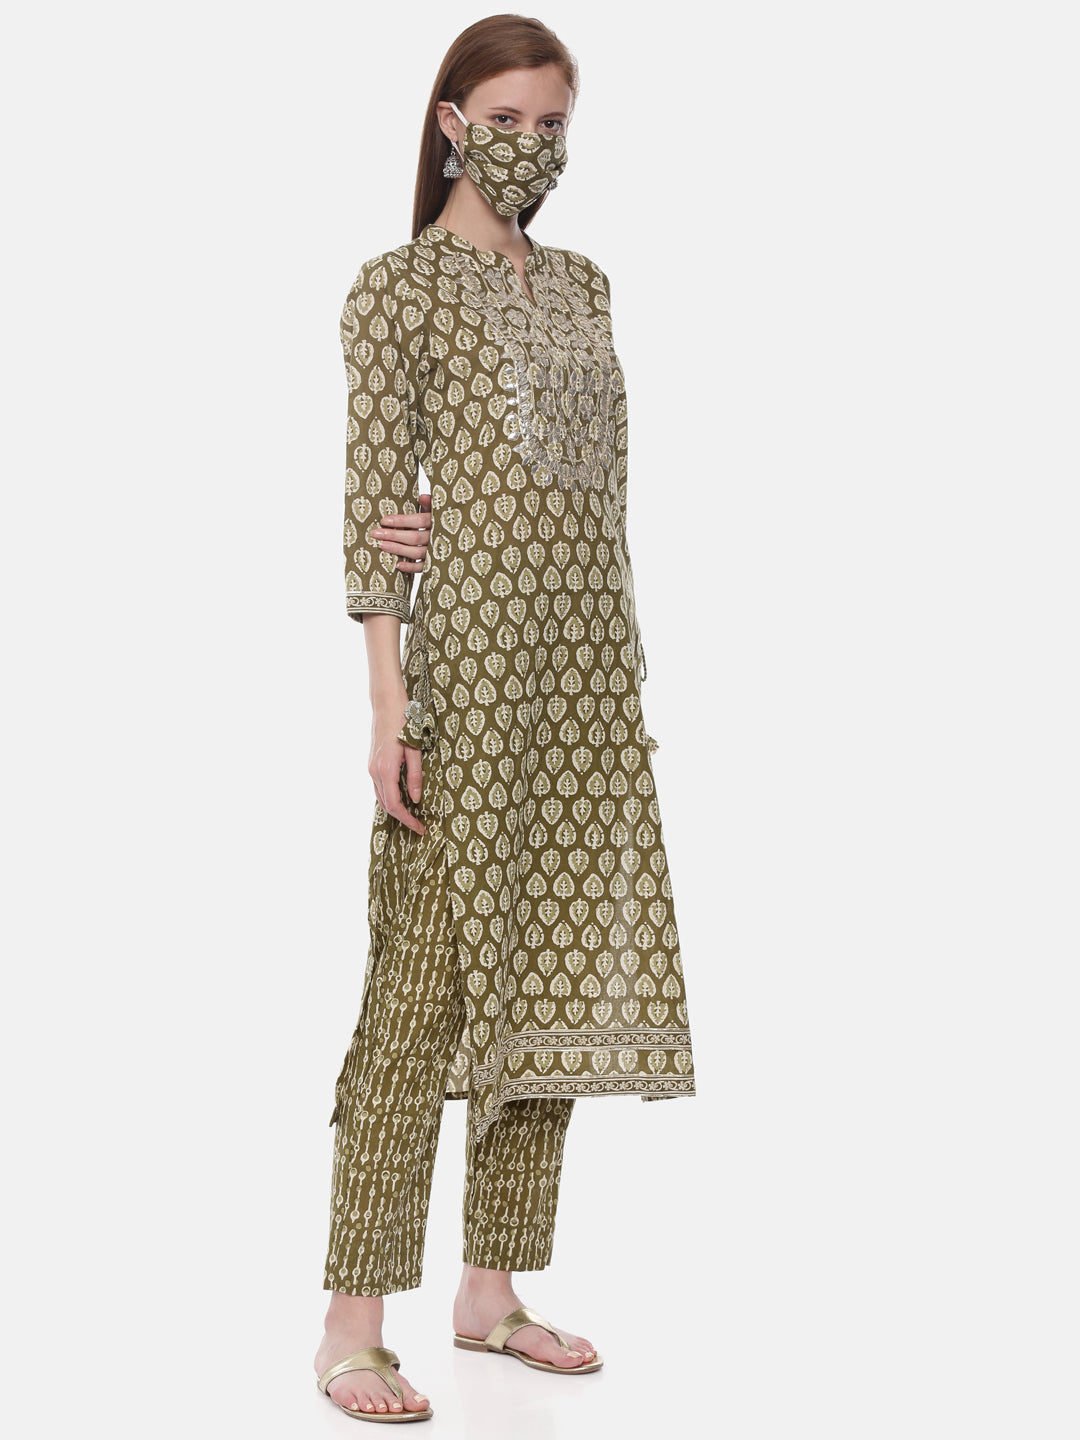 Neeru's Mehadi Green Color Cotton Fabric Suit-Pant